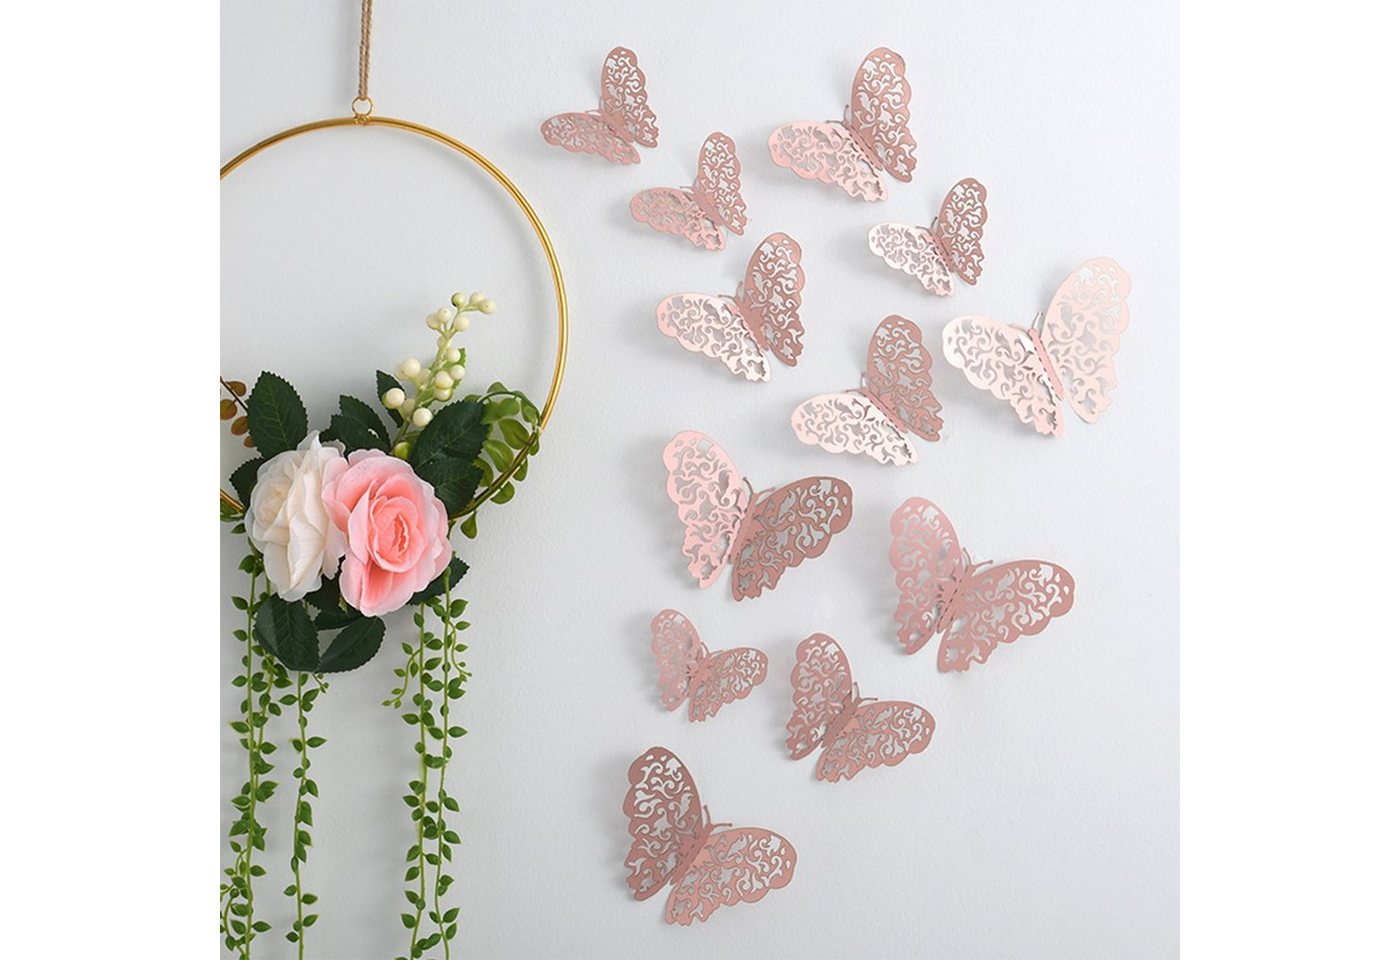 Dedom 3D-Wandtattoo 3D-Schmetterlings-Wandaufkleber,Wanddekoration Metalltextur (12 St) von Dedom